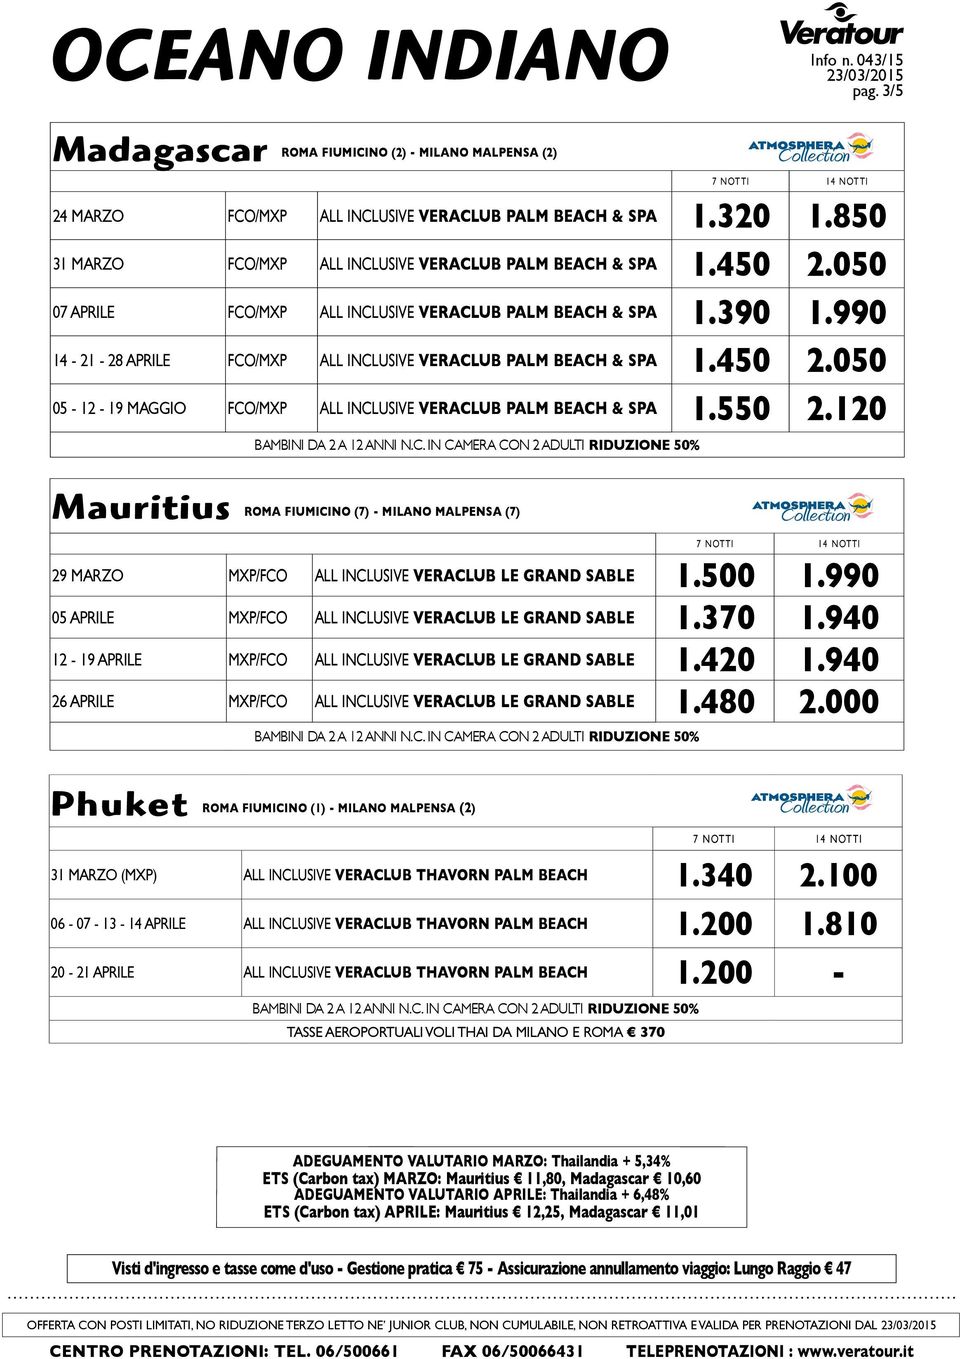 990 14-21 - 28 APRILE FCO/MXP ALL INCLUSIVE VERACLUB PALM BEACH & SPA 1.450 2.050 05-12 - 19 MAGGIO FCO/MXP ALL INCLUSIVE VERACLUB PALM BEACH & SPA 1.550 2.